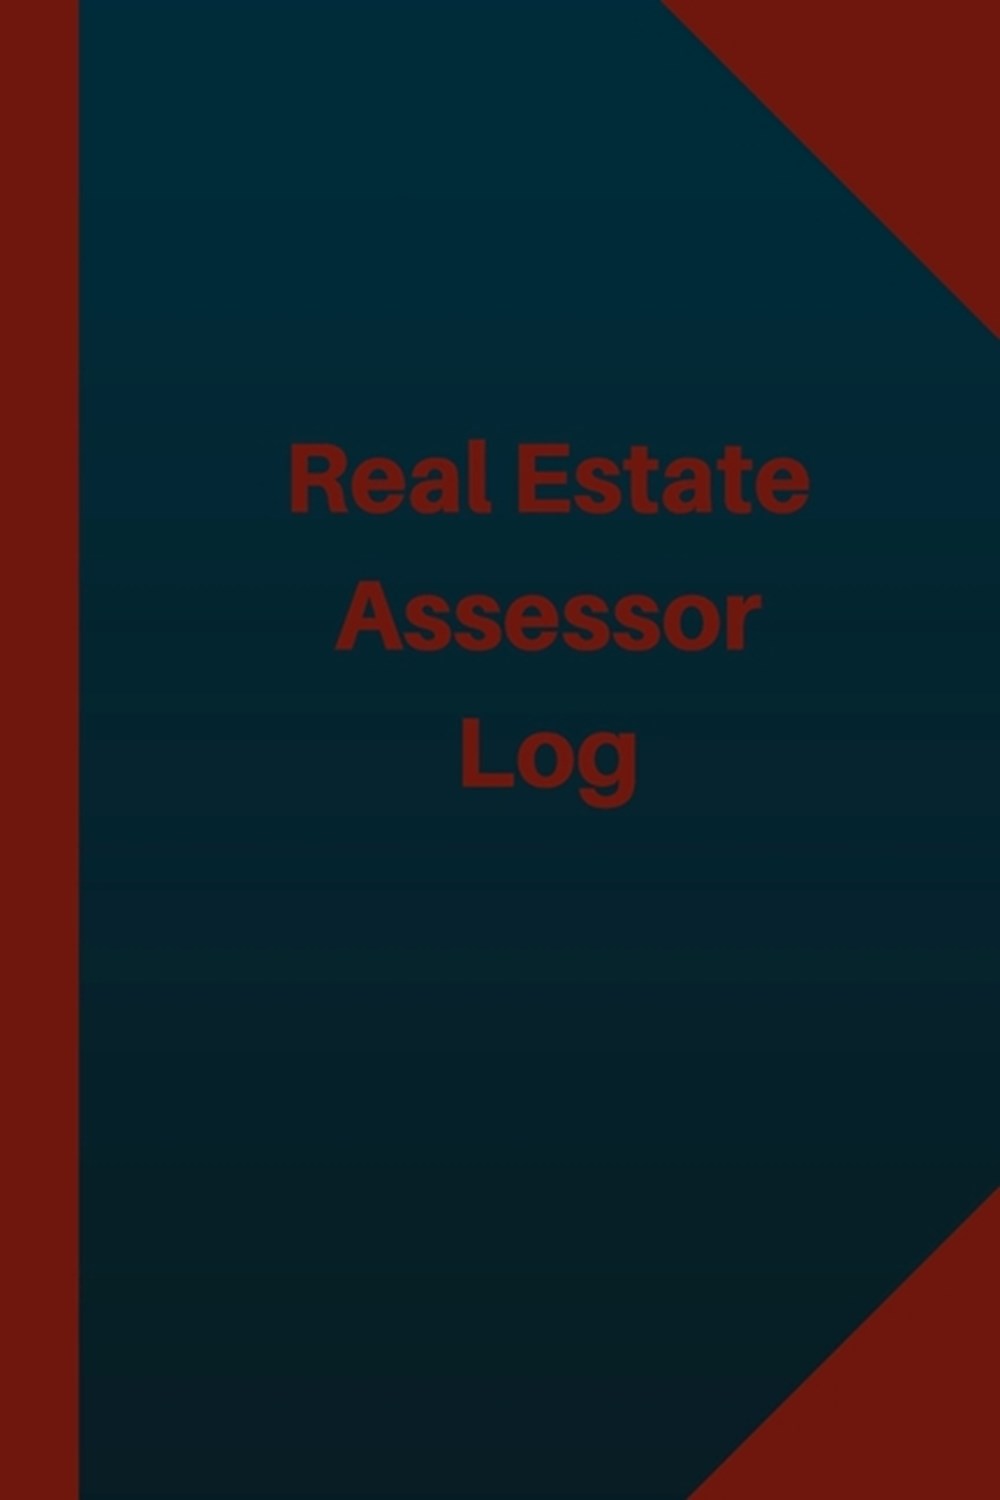 Real Estate Assessor Log (Logbook, Journal - 124 pages 6x9 inches) Real Estate Assessor Logbook (Blu